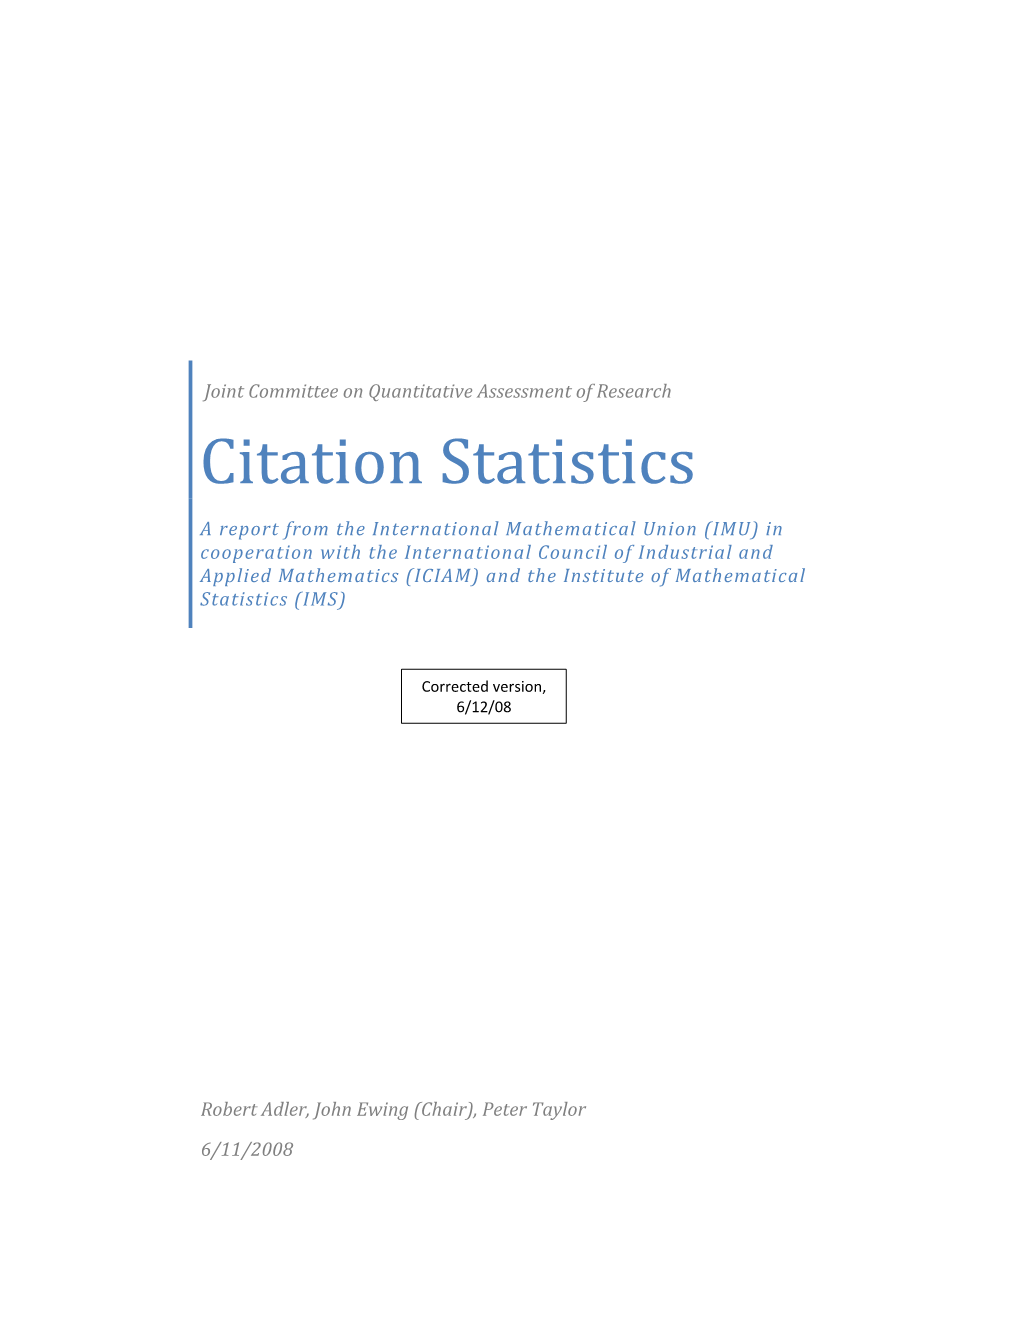 IMU Report on Citation Statistics